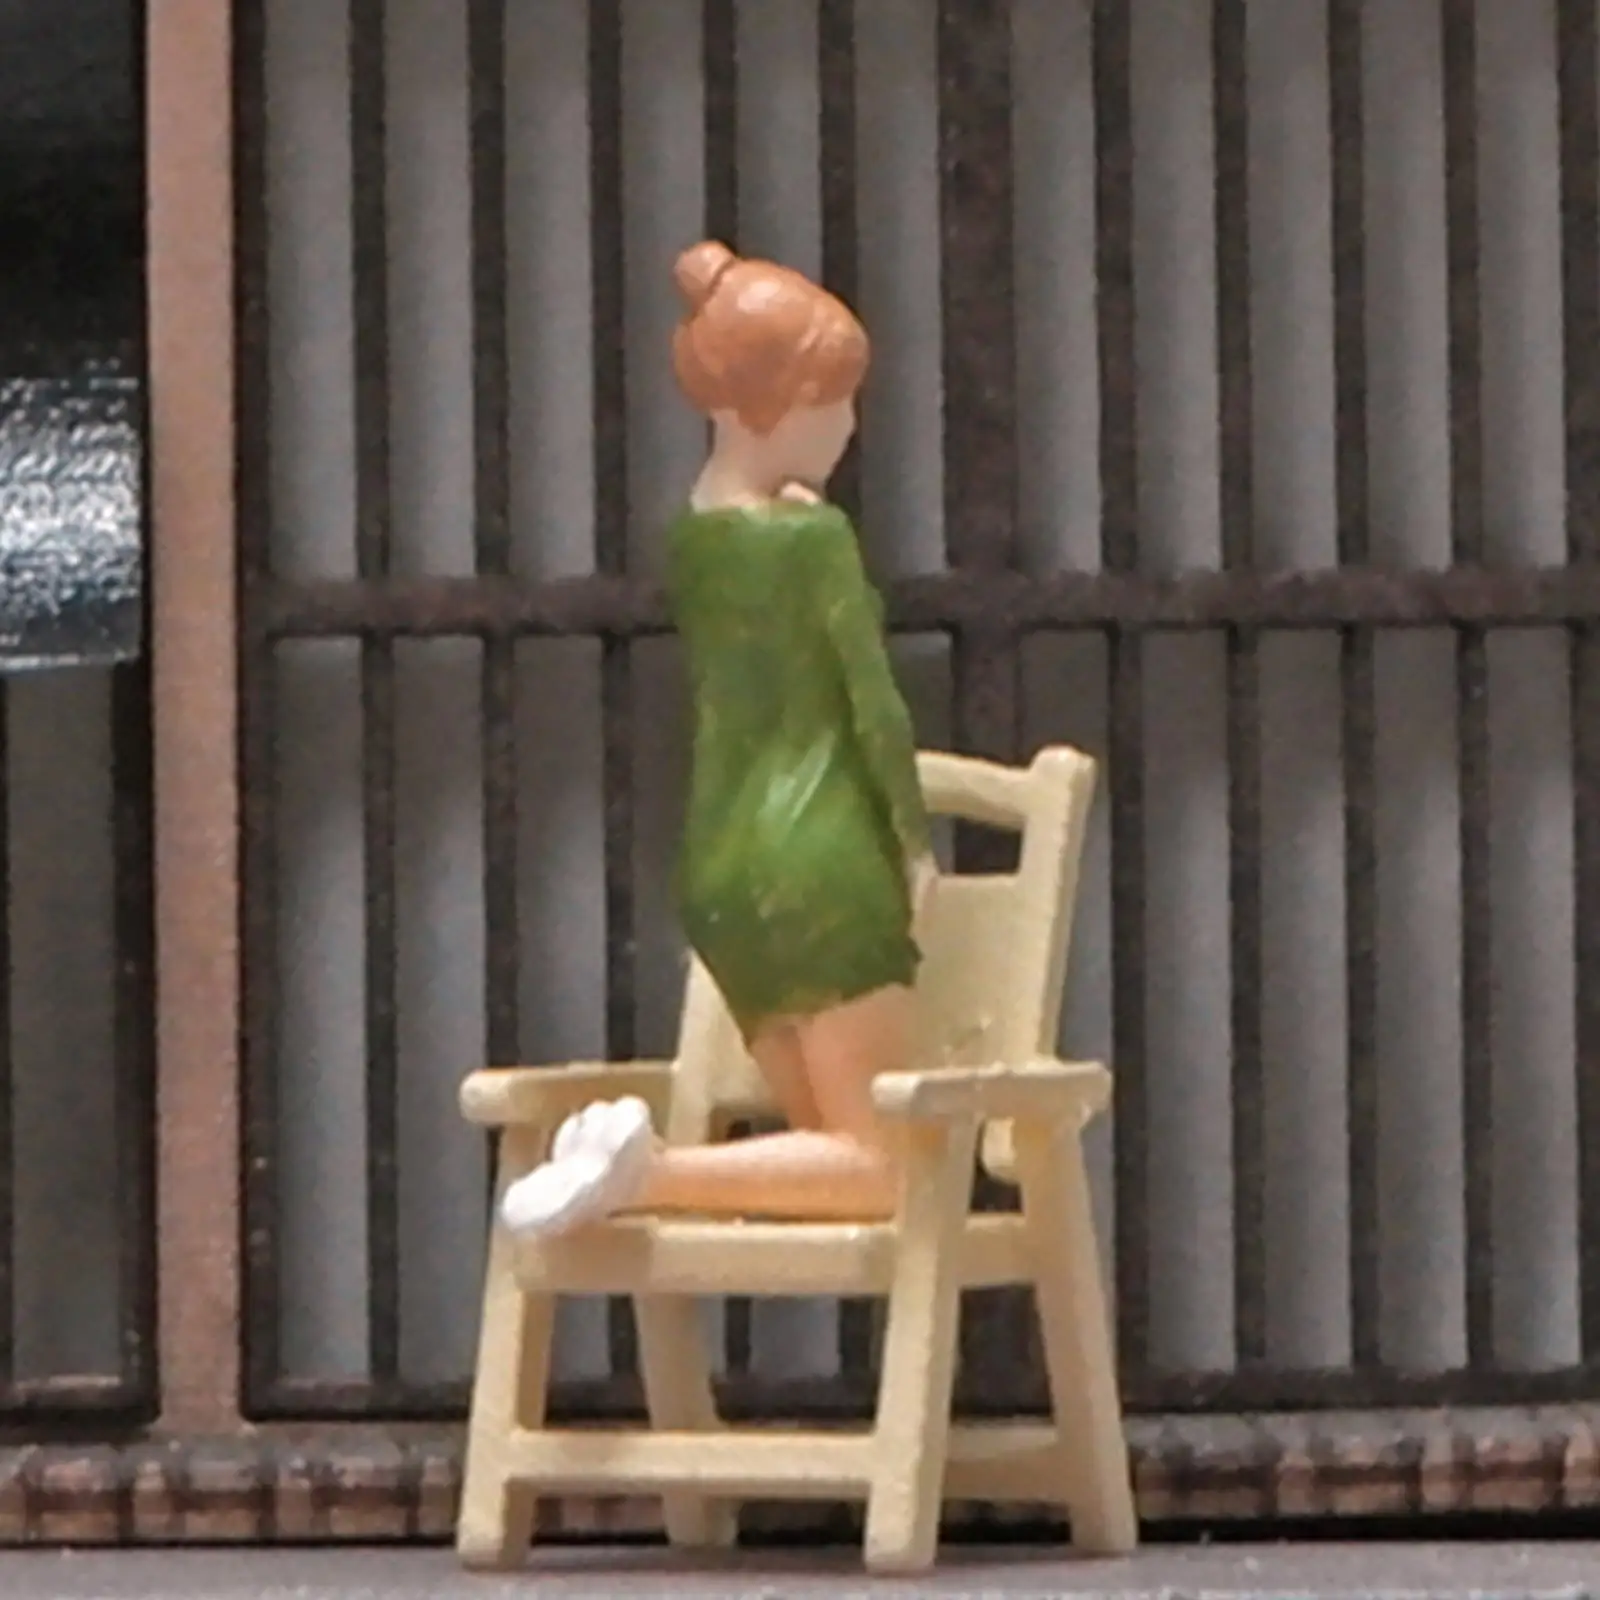 1/64 People Figures Girl Figures Miniature People Figurines for Scenery Landscape